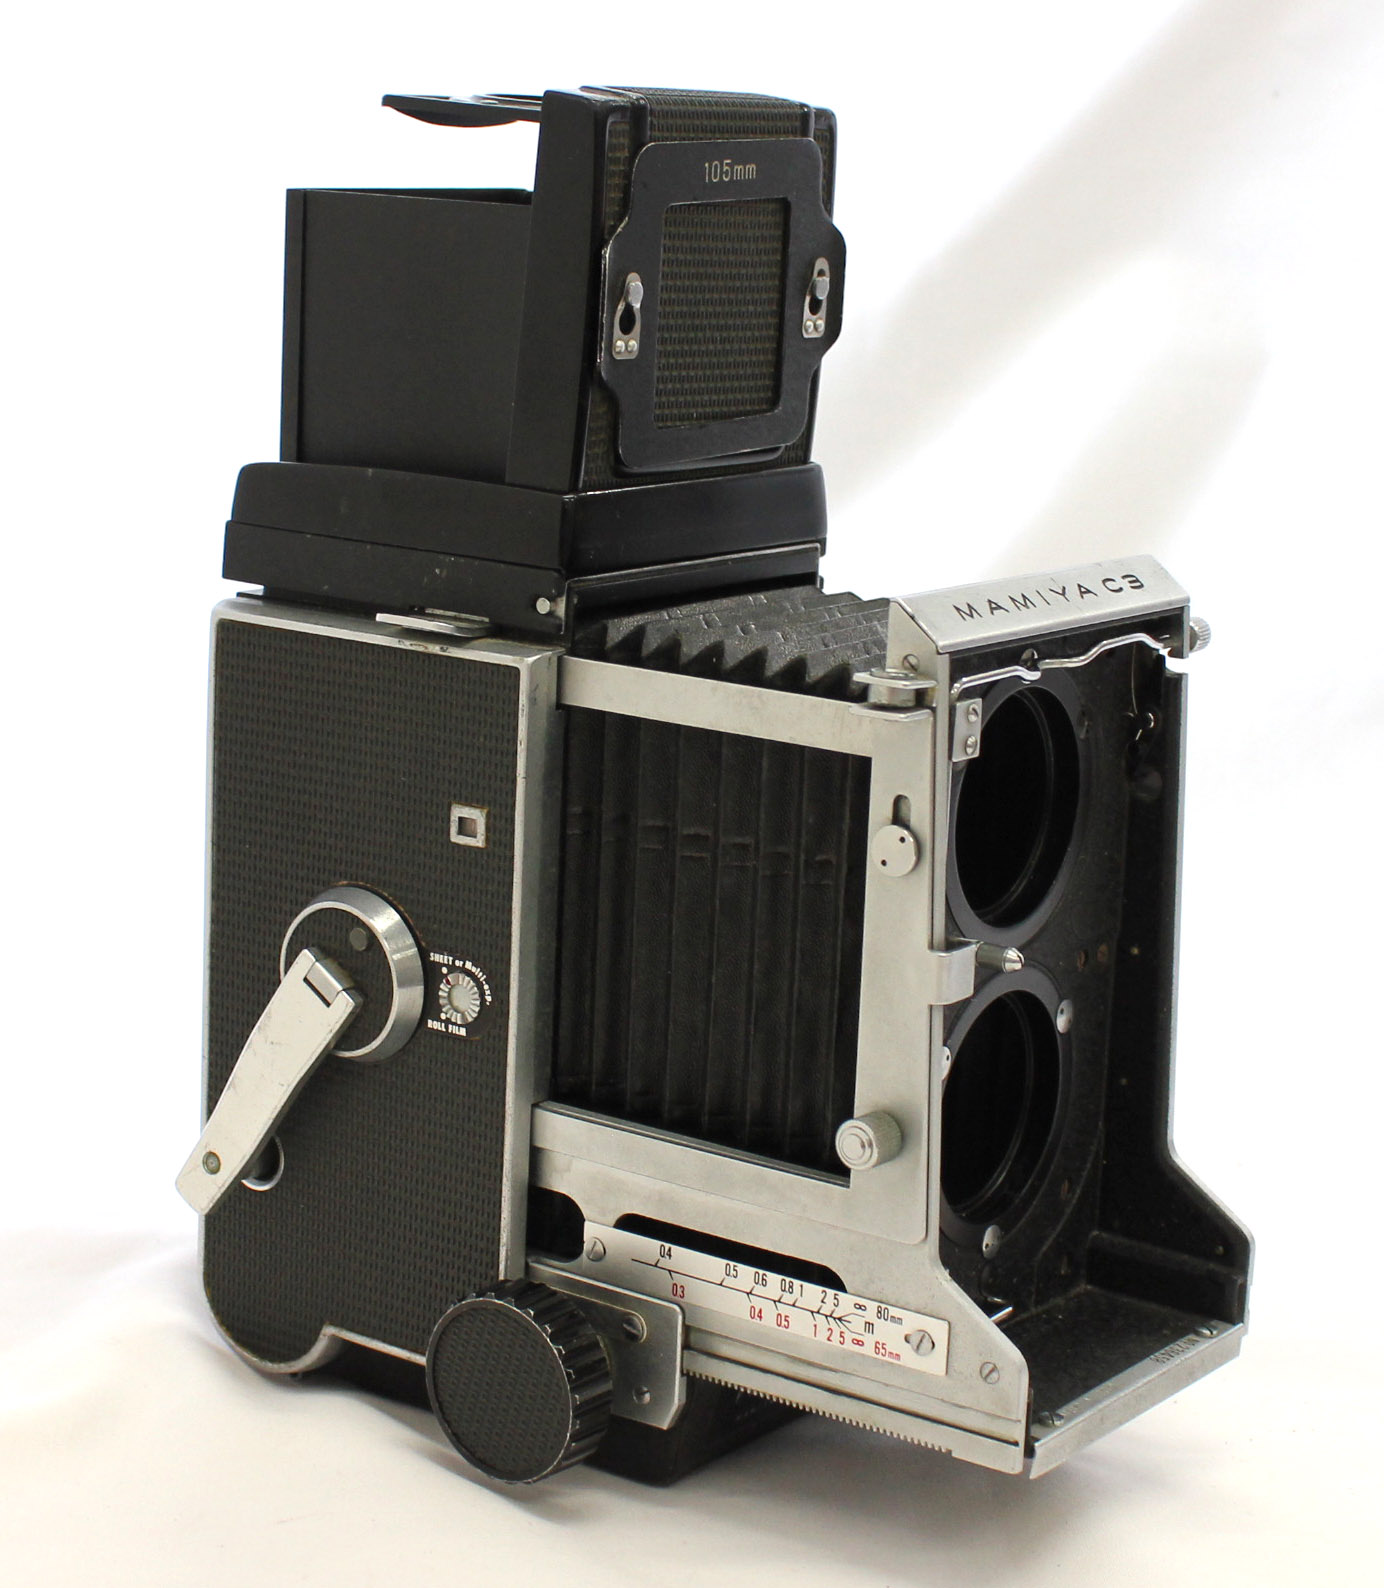 Mamiya C3 Professional Medium Format TLR Camera with 105mm F3.5 